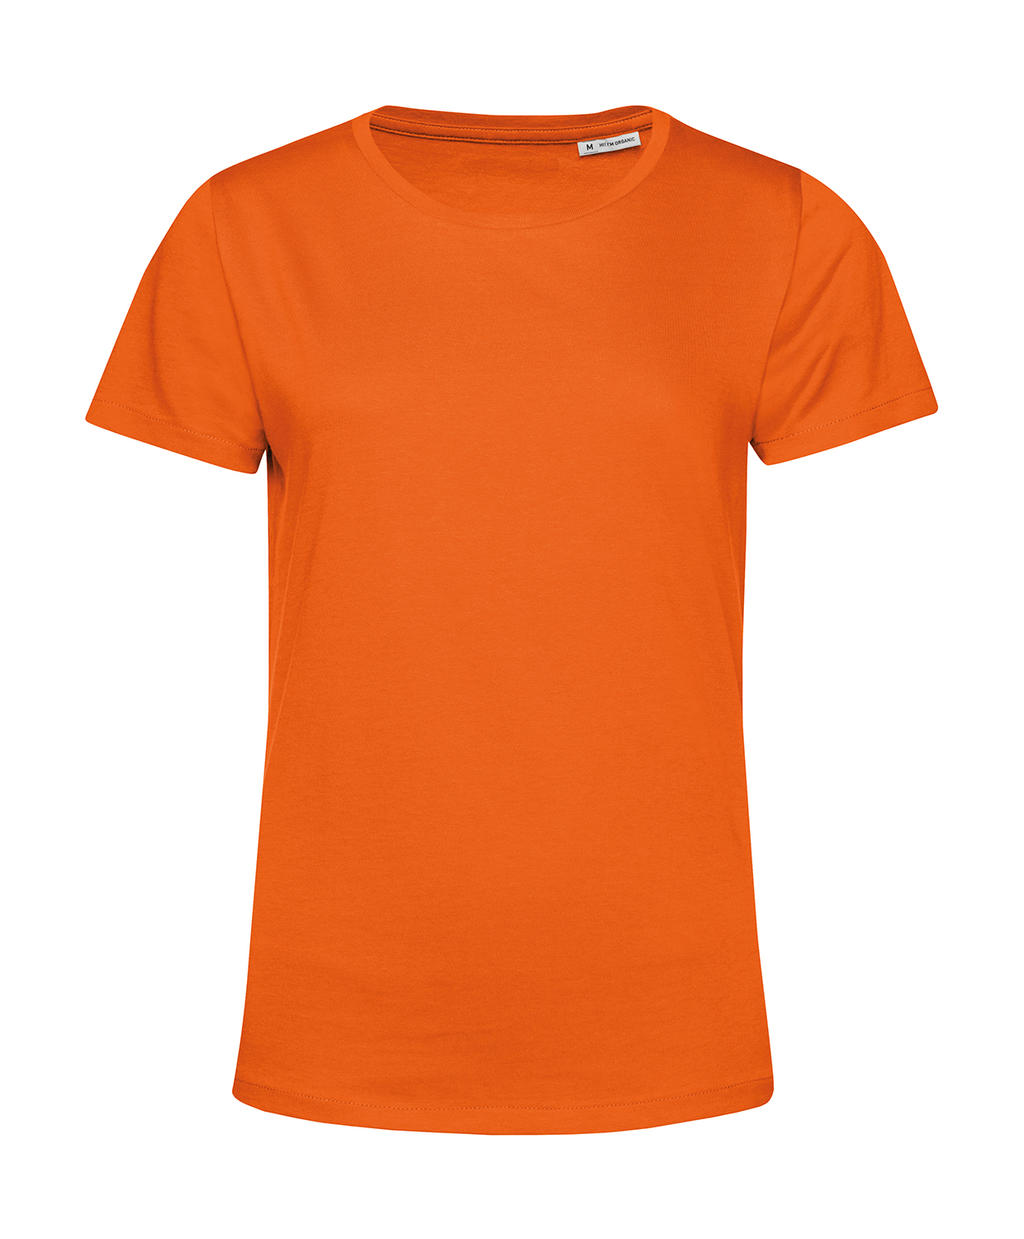 Tričko dámské BC Organic Inspire E150 - oranžové, XL